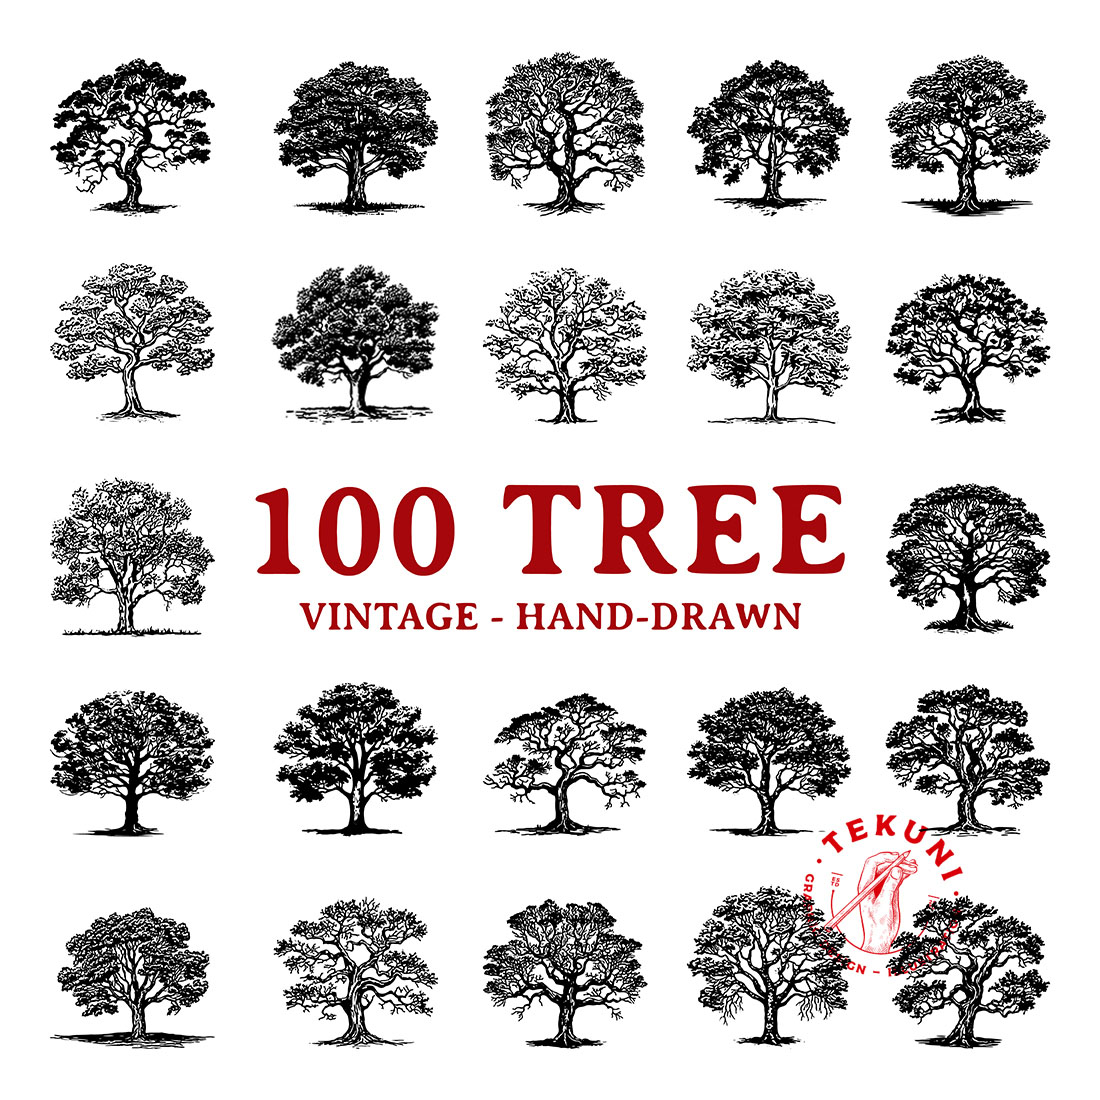 Tree SVG hand-drawn set, tree logo vintage cover image.